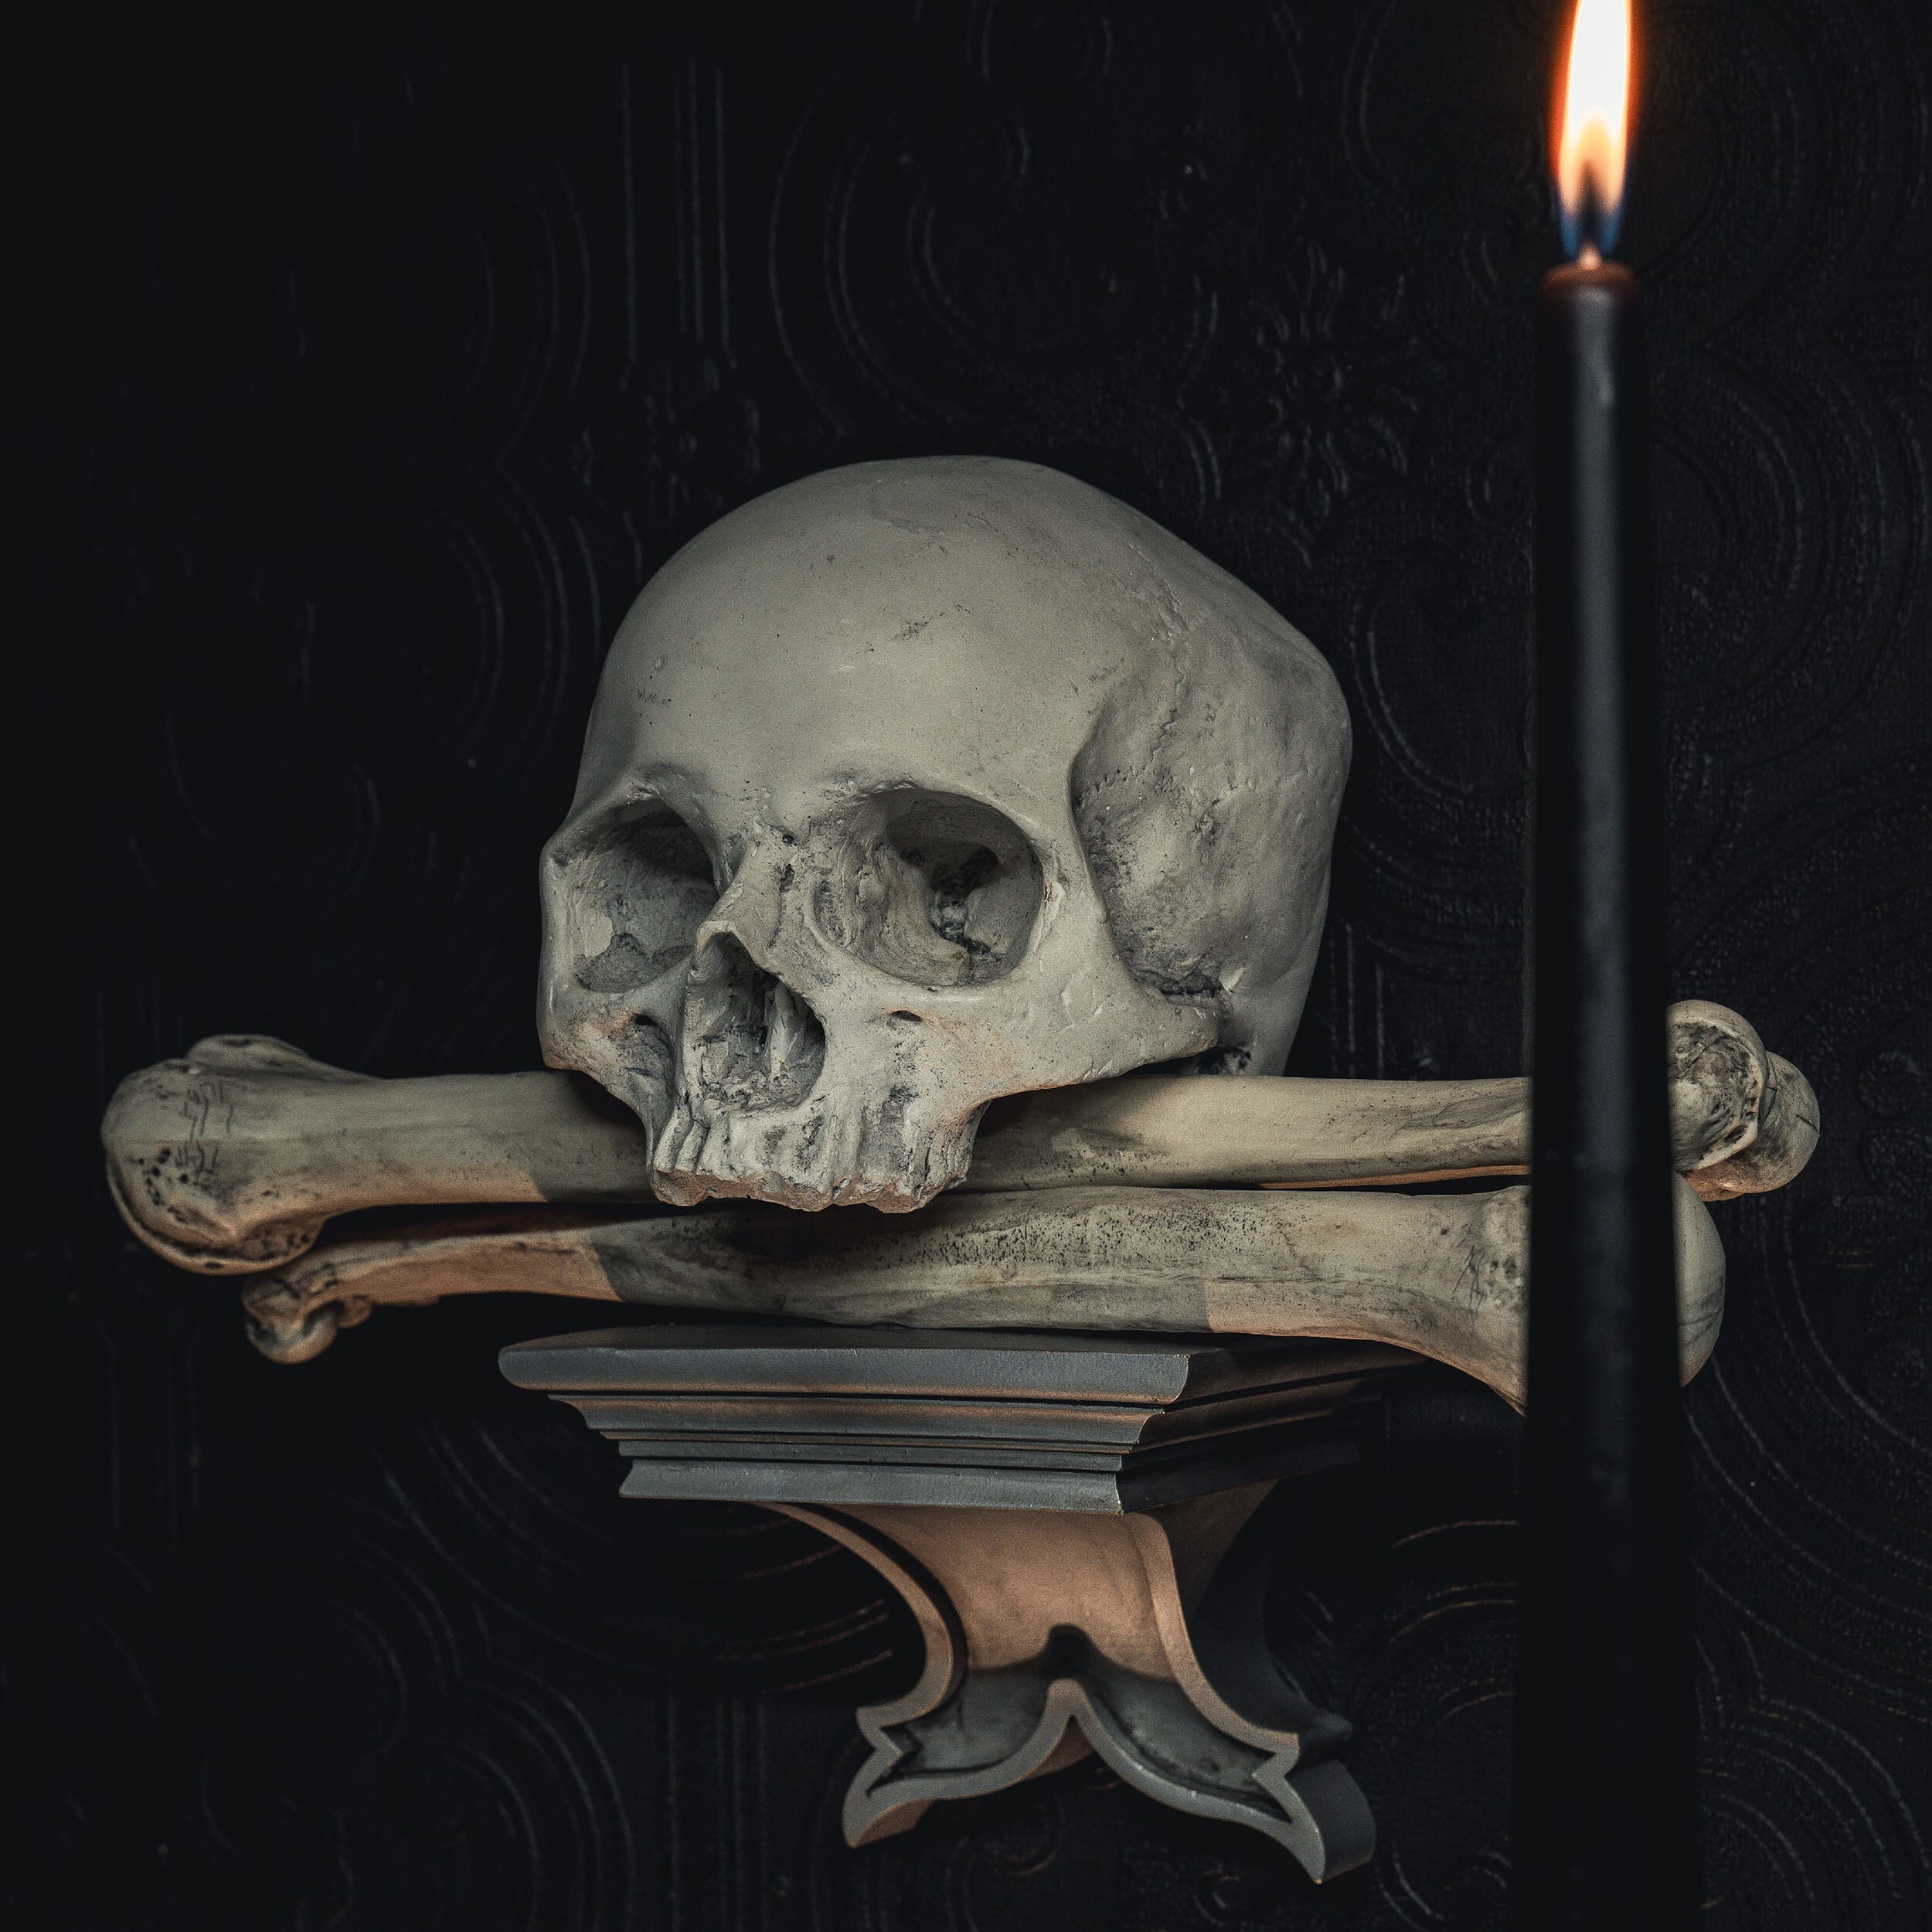 ossuary skull corbel the blackened teeth gothic home decor